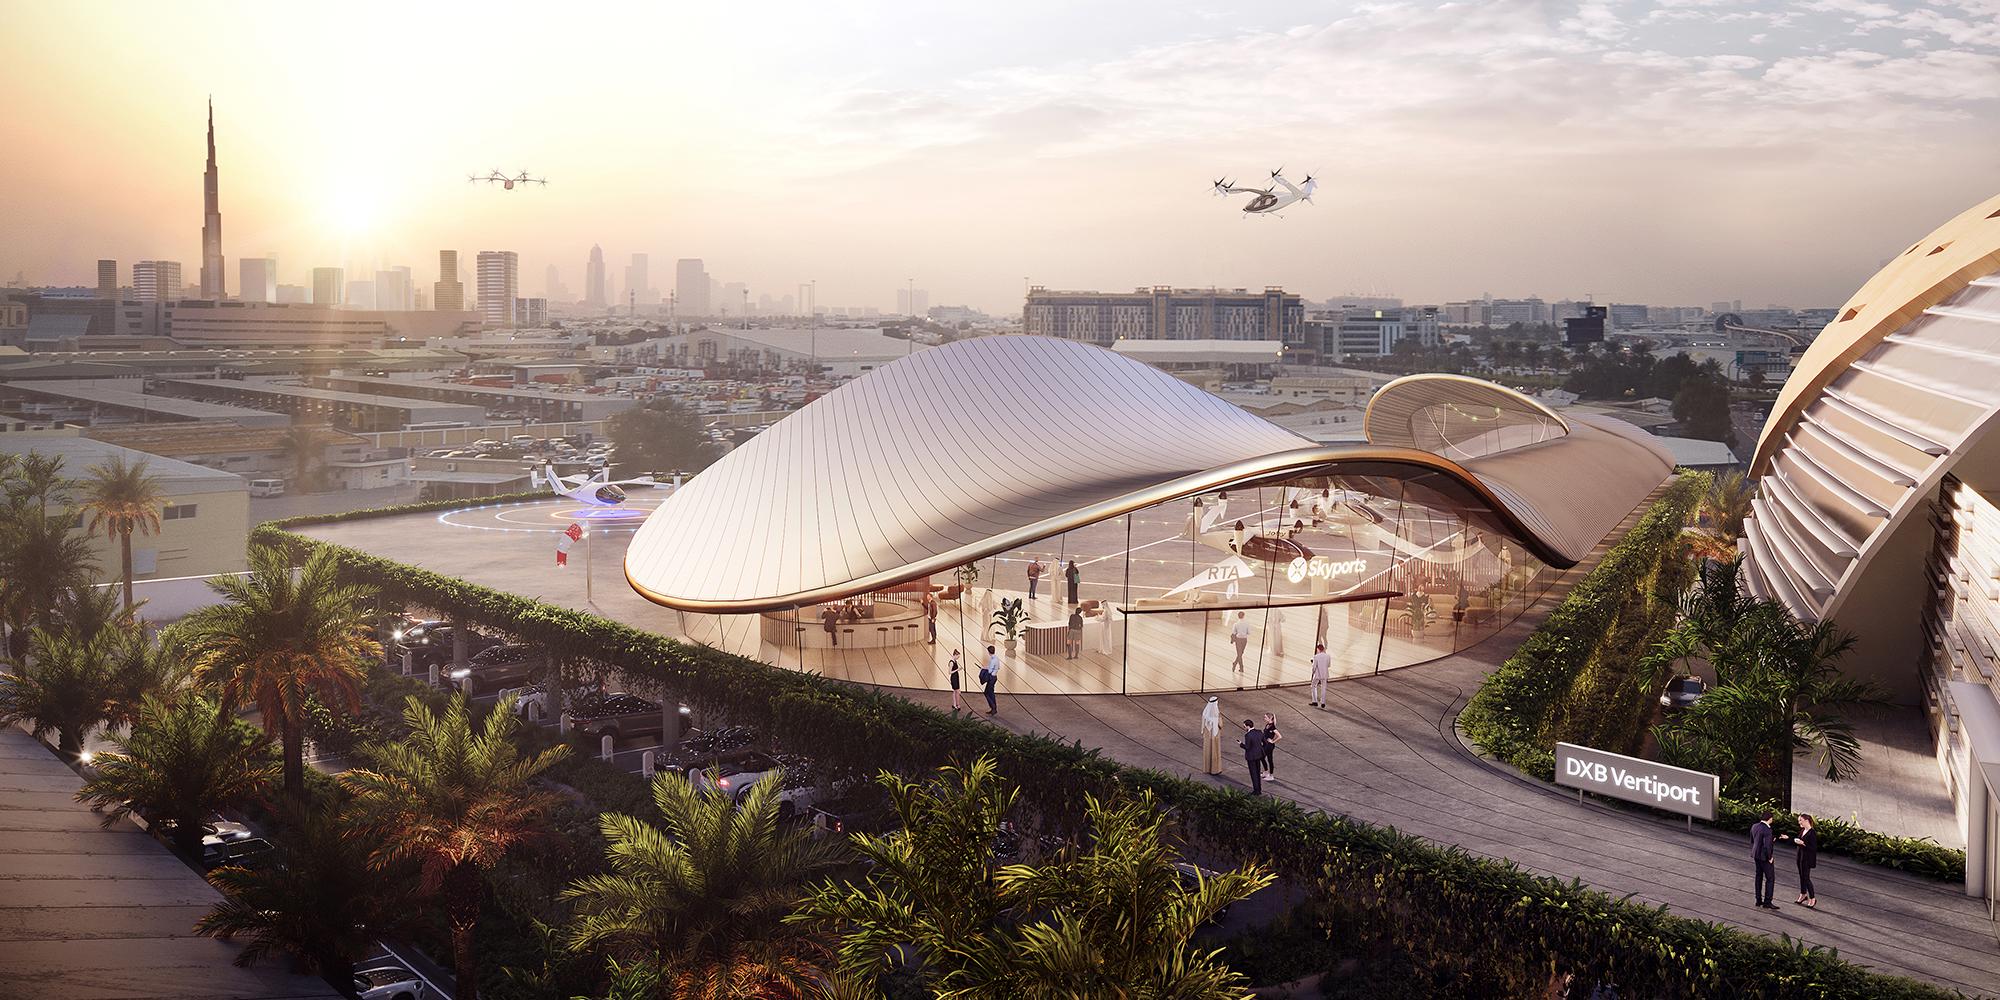 Foster + Partners' design concept for a vertiport terminal in Dubai